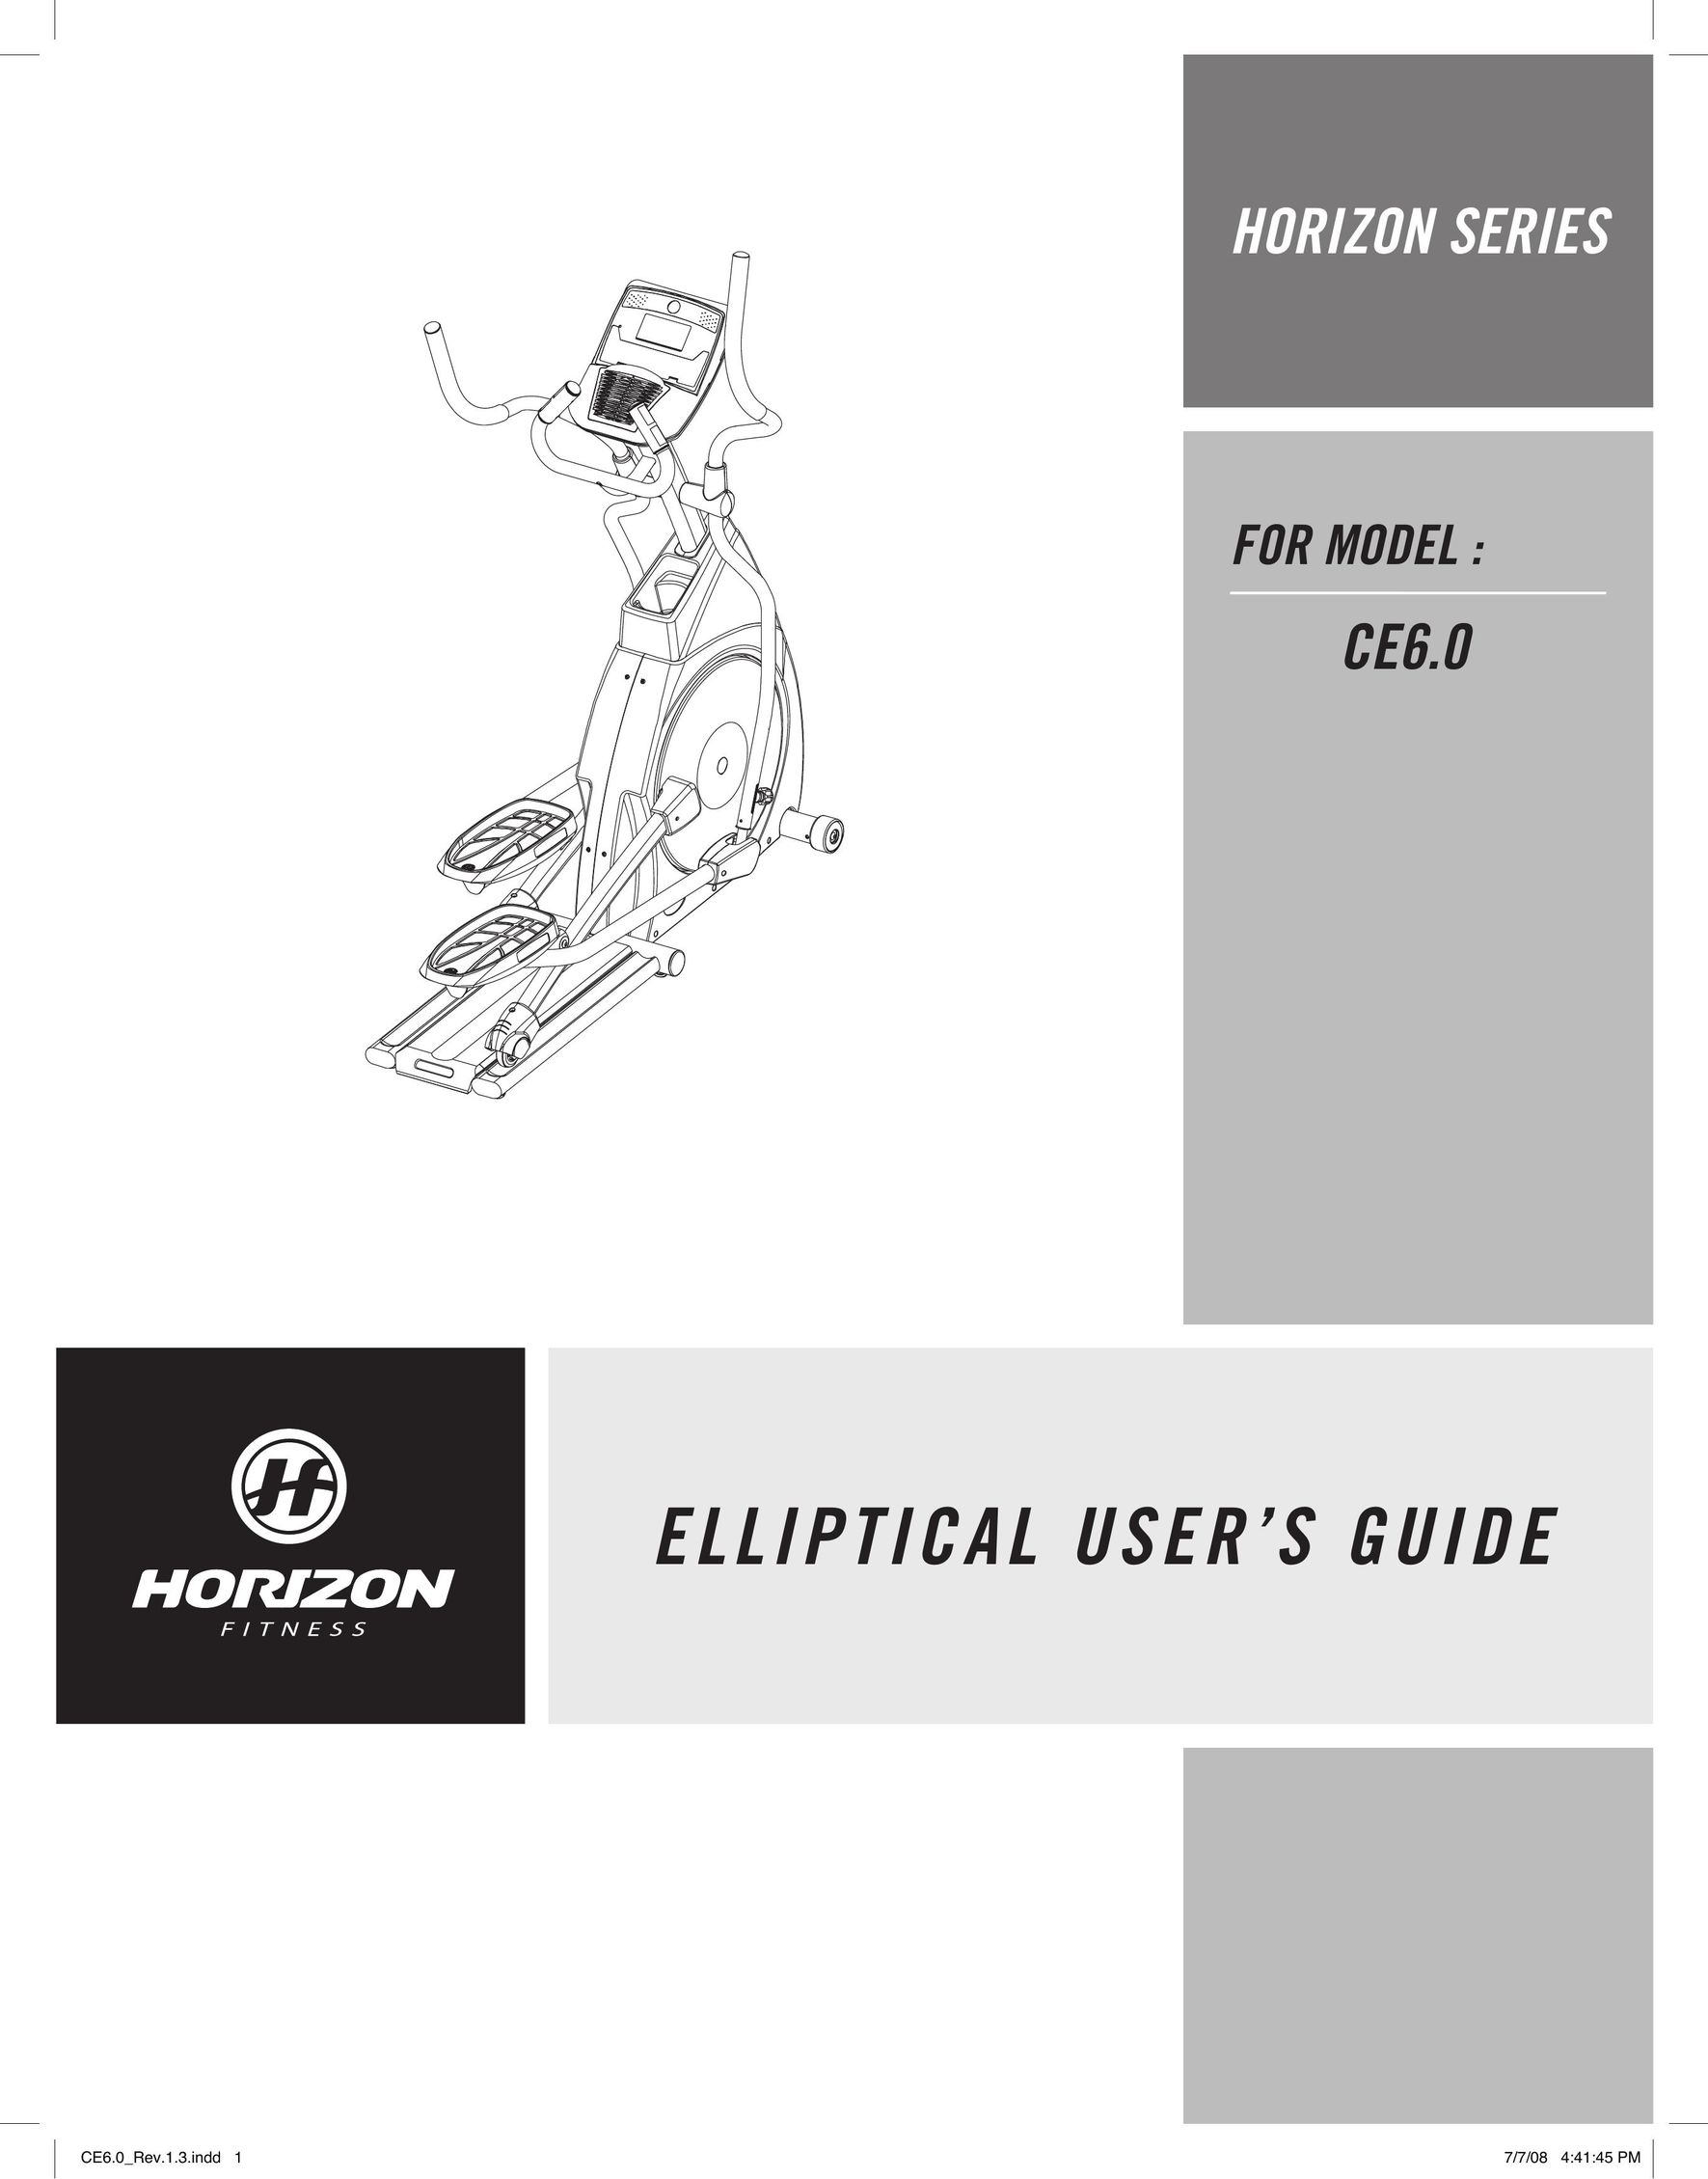 Horizon Fitness CE6.0 Elliptical Trainer User Manual